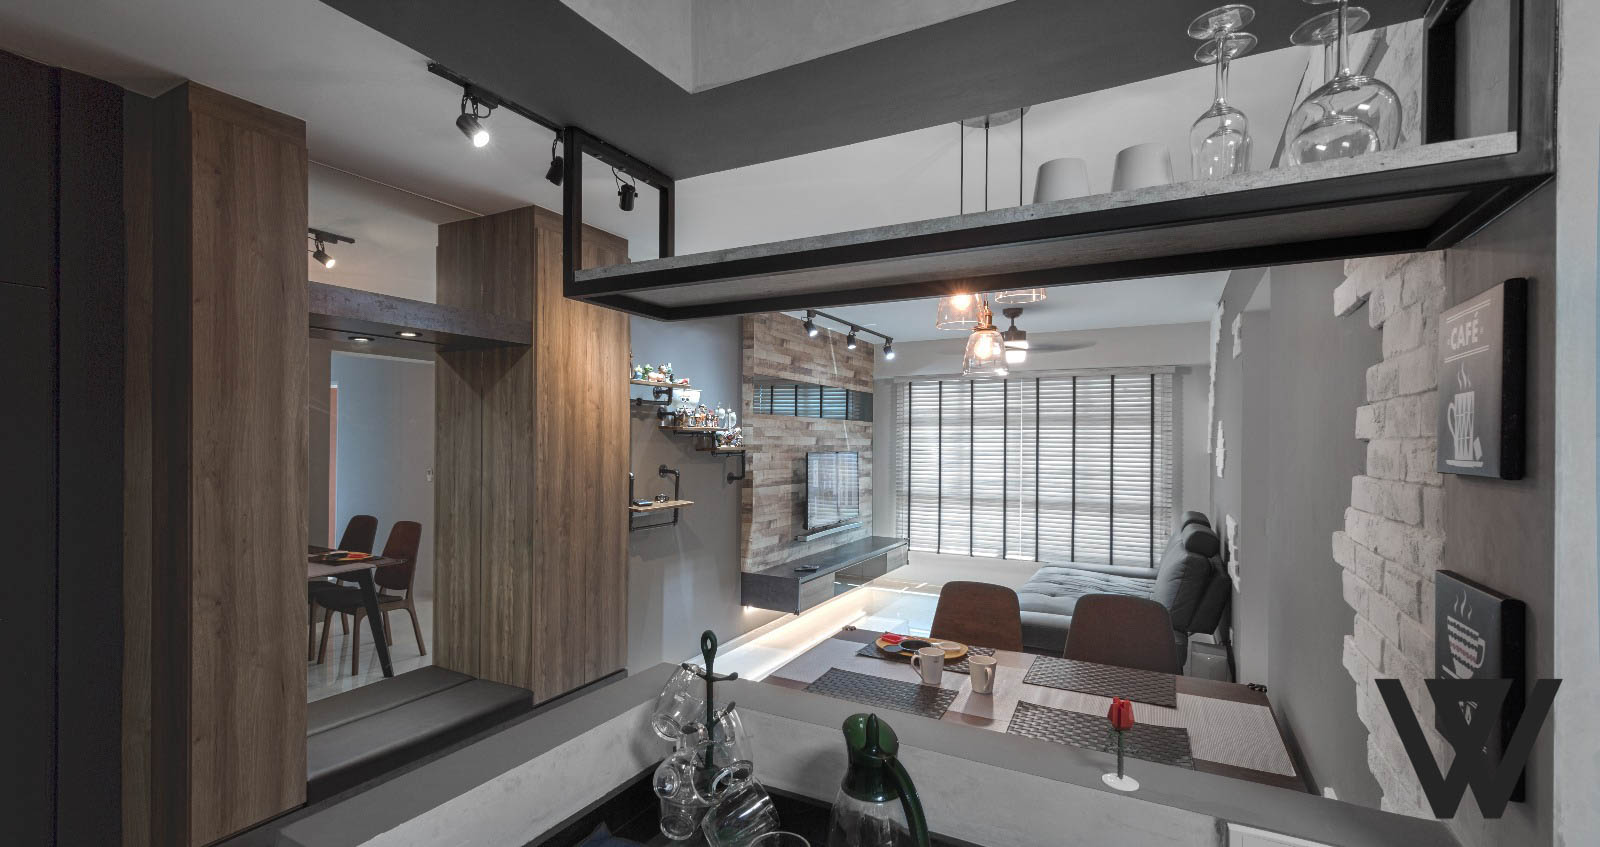 Blk 426A Yishun Ave 11 - 1206sqft by Swiss Interior Design Pte Ltd. Unit is HDB and follows a Scandinavian style.